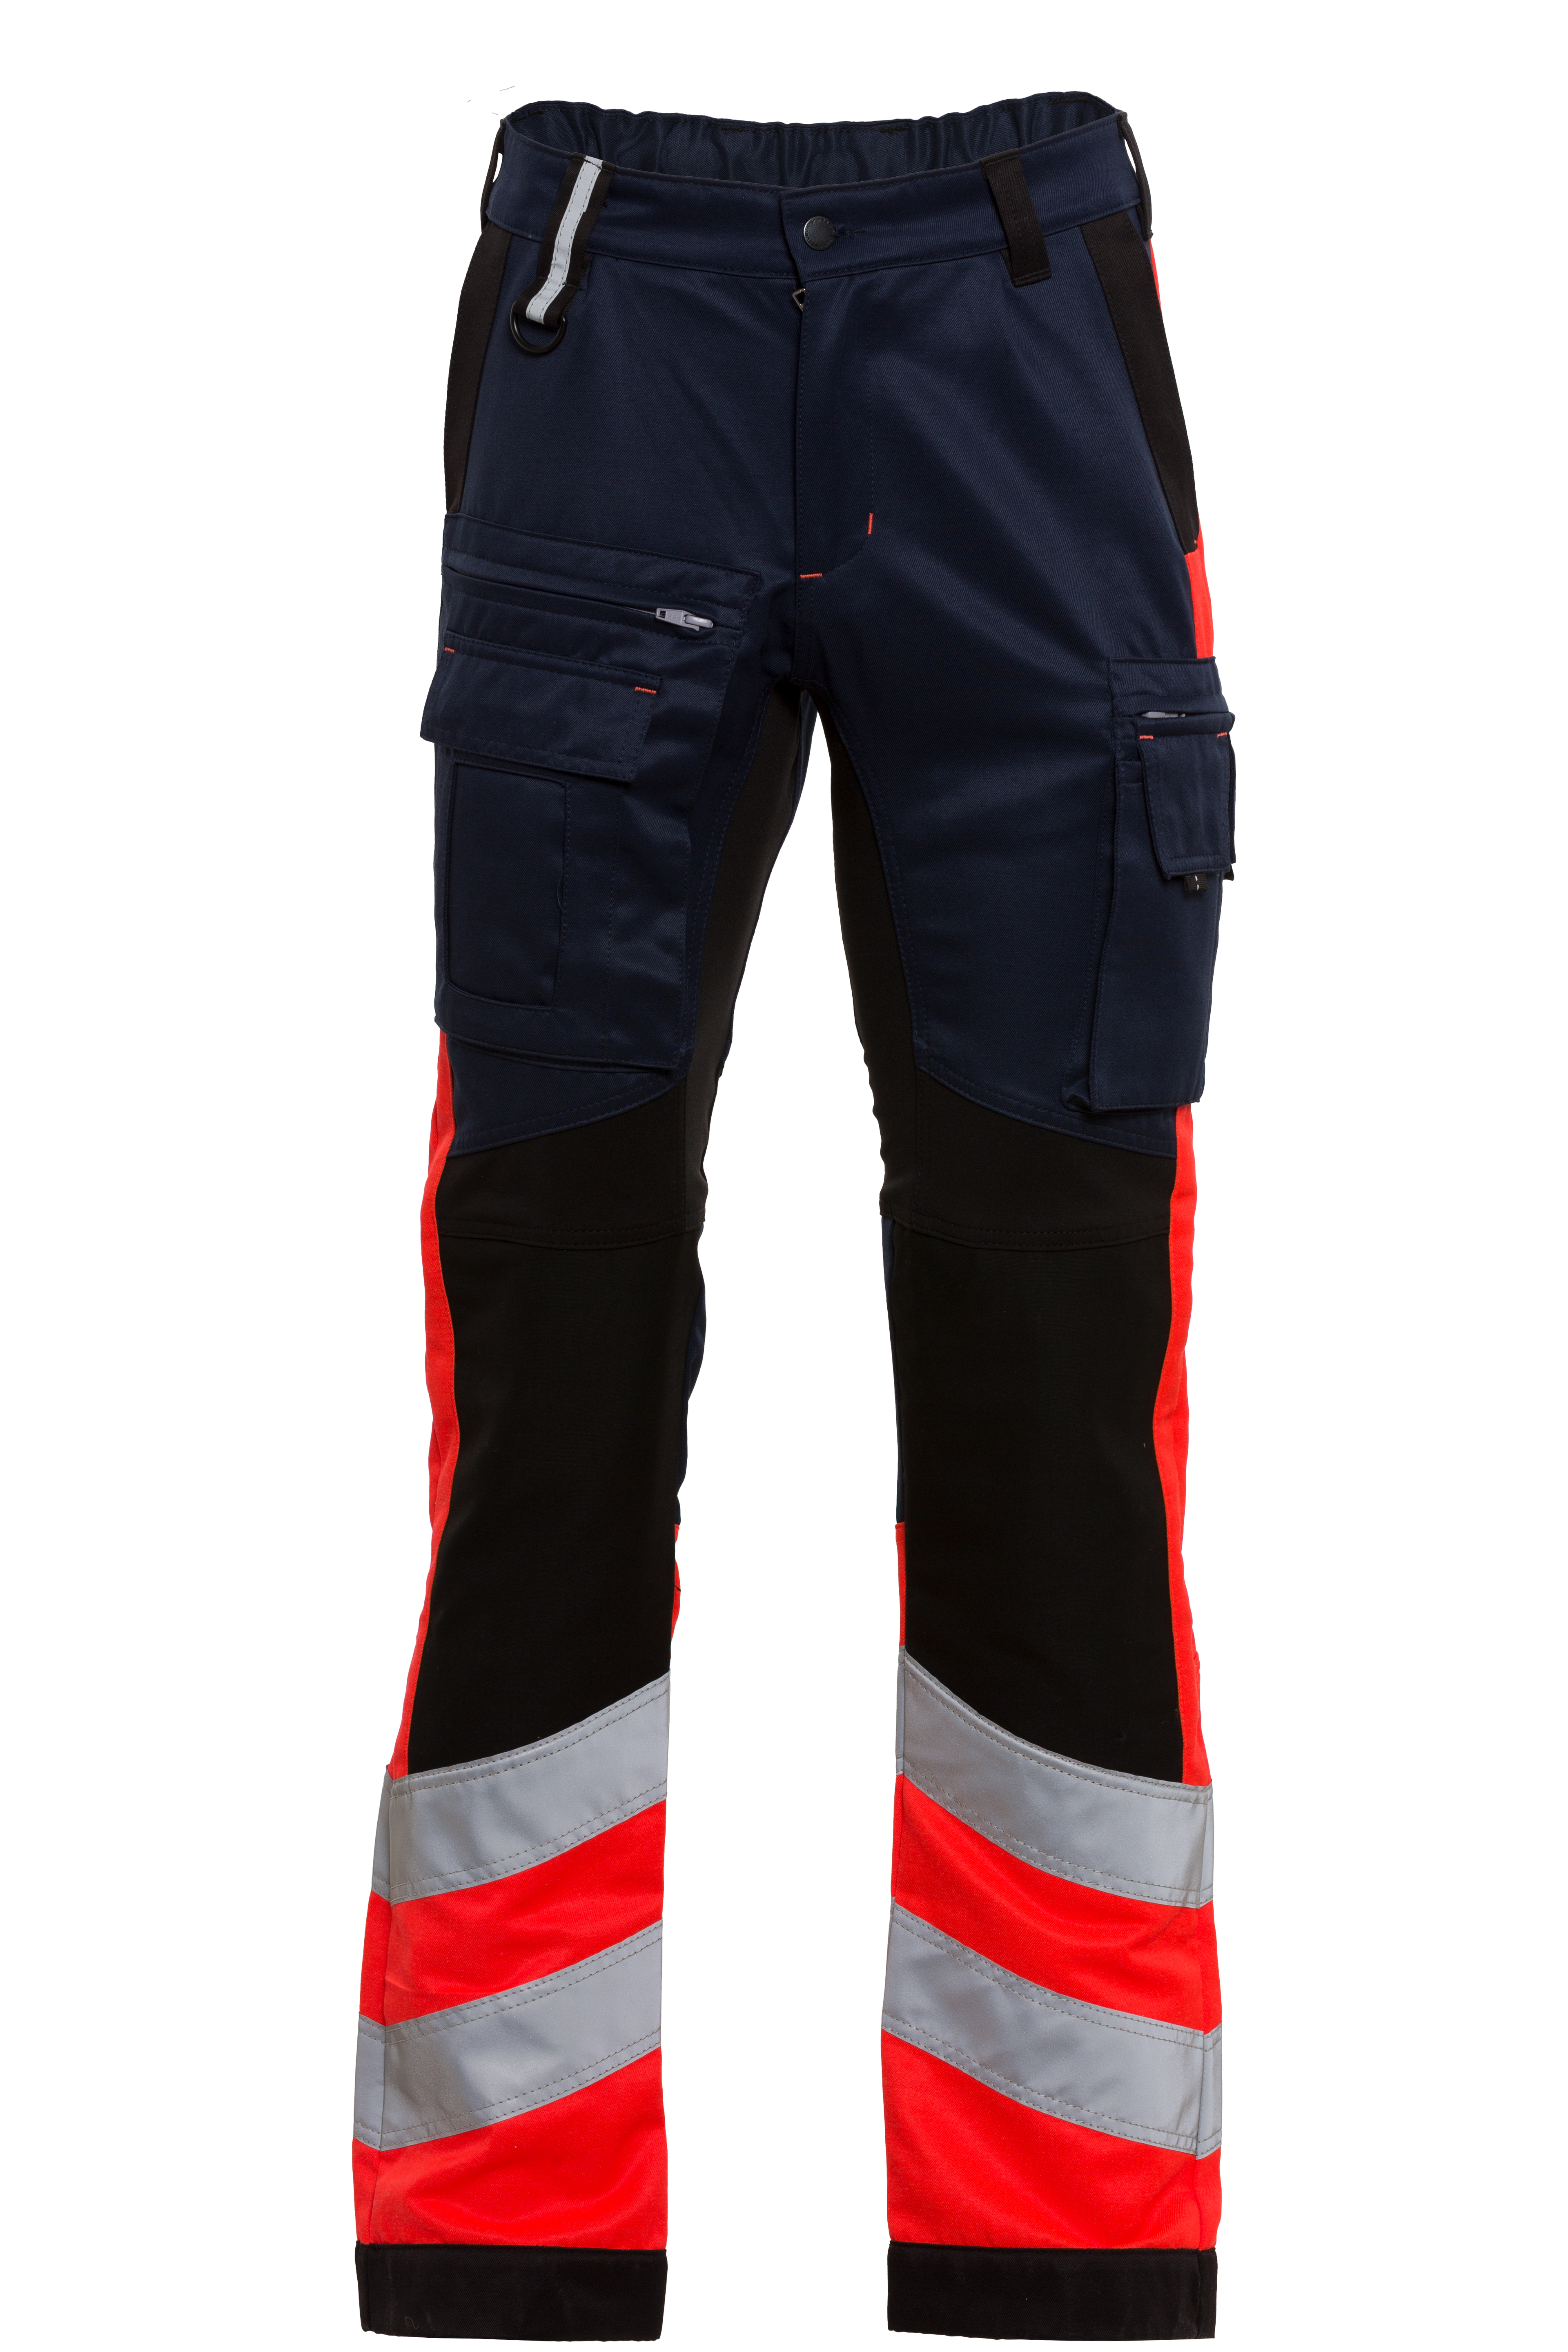 Rescuewear Unisex Hose 33416V2SW Stretch HiVis Klasse 1 Marineblau / Schwarz / Neon Rot